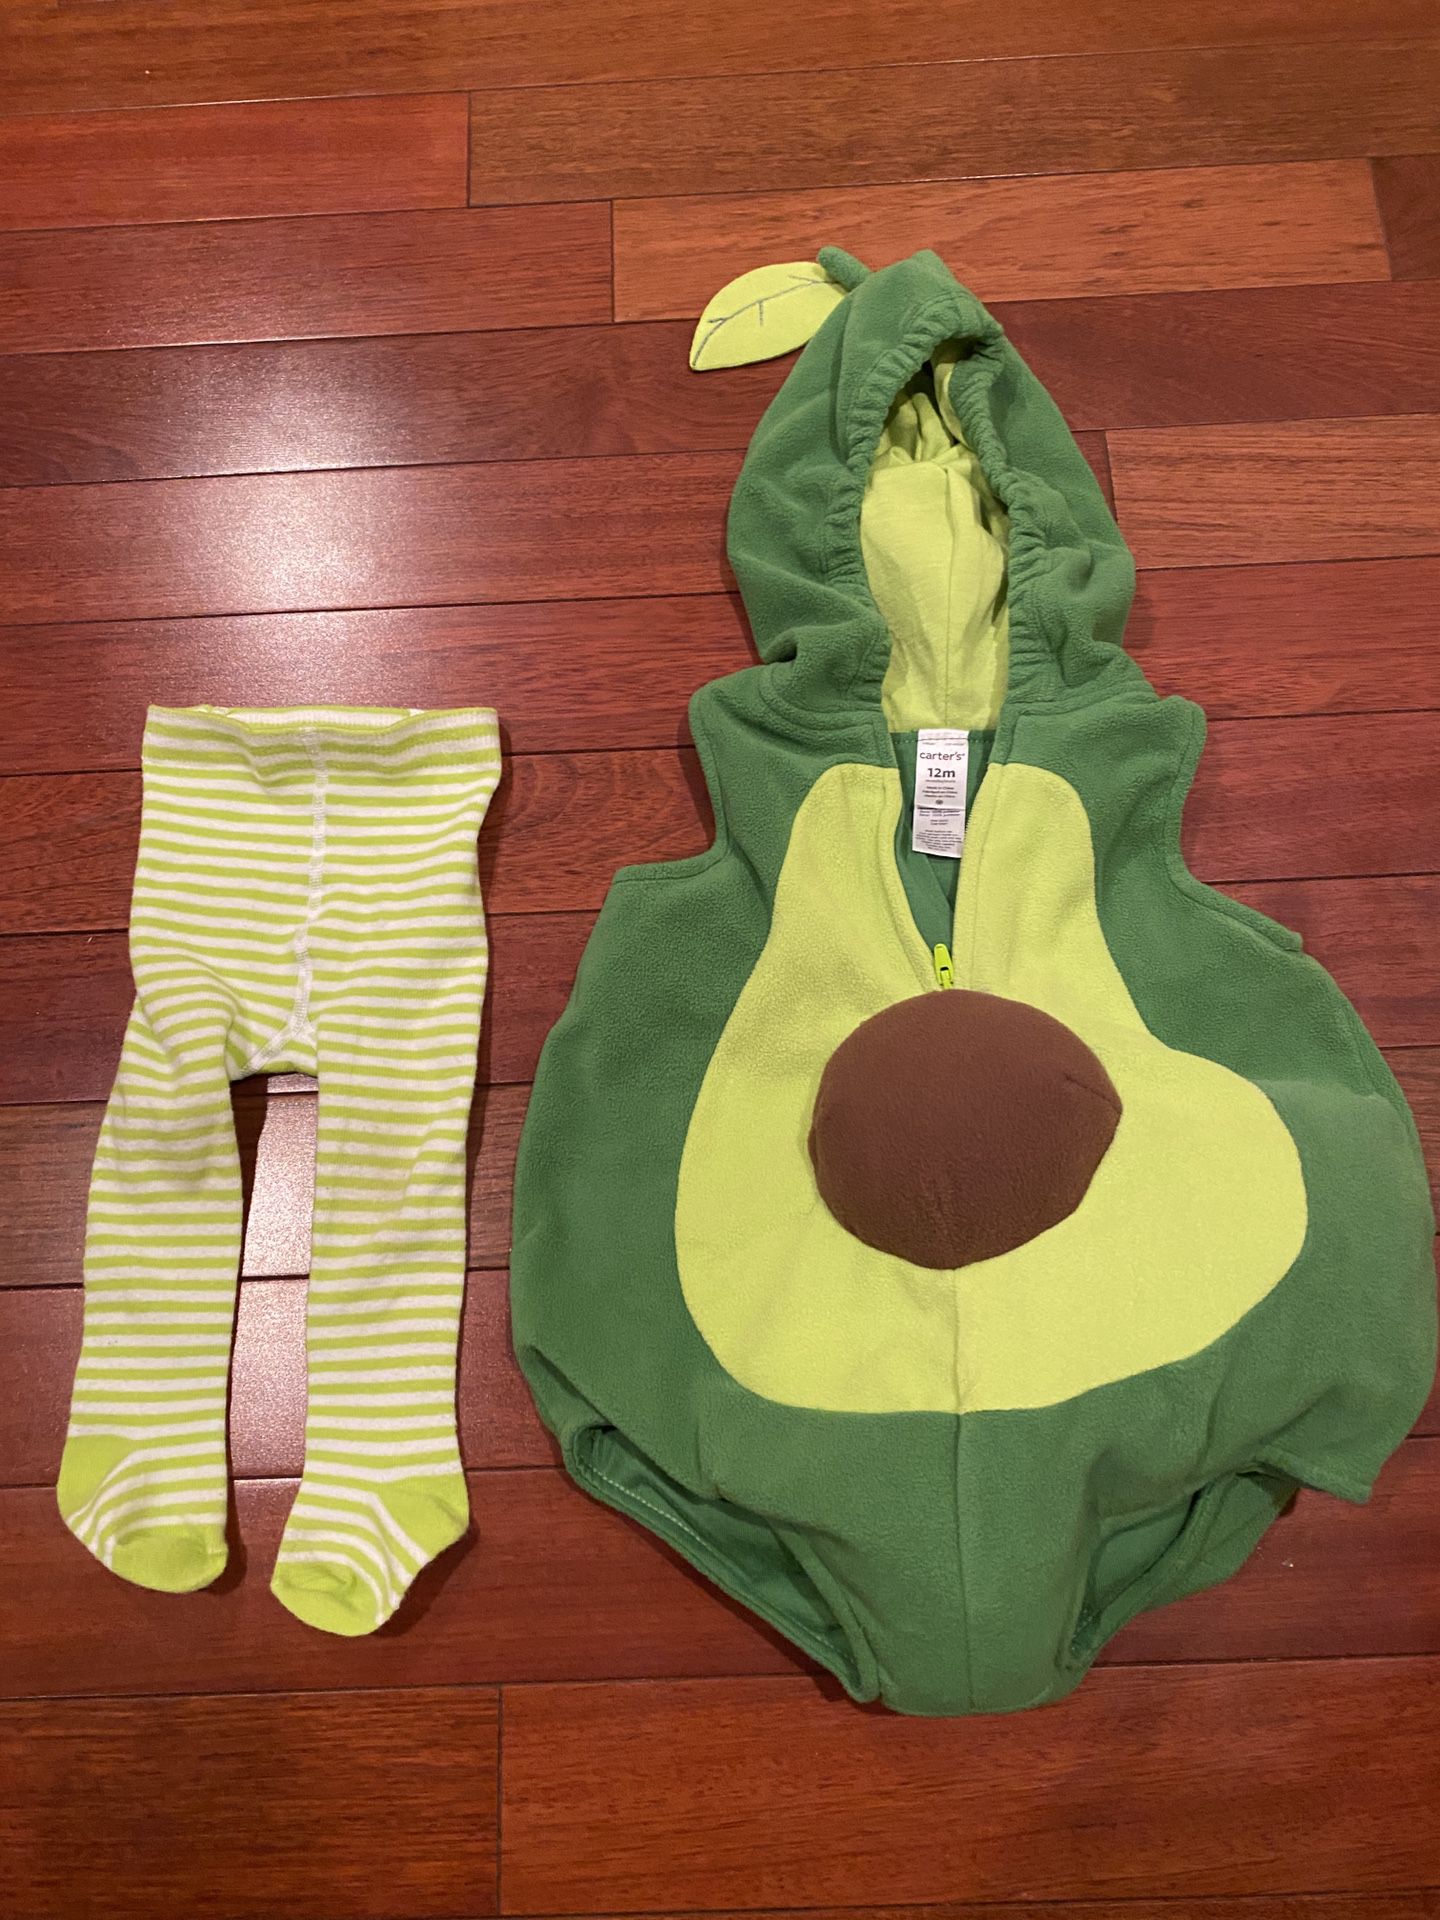 Carters baby avocado costume